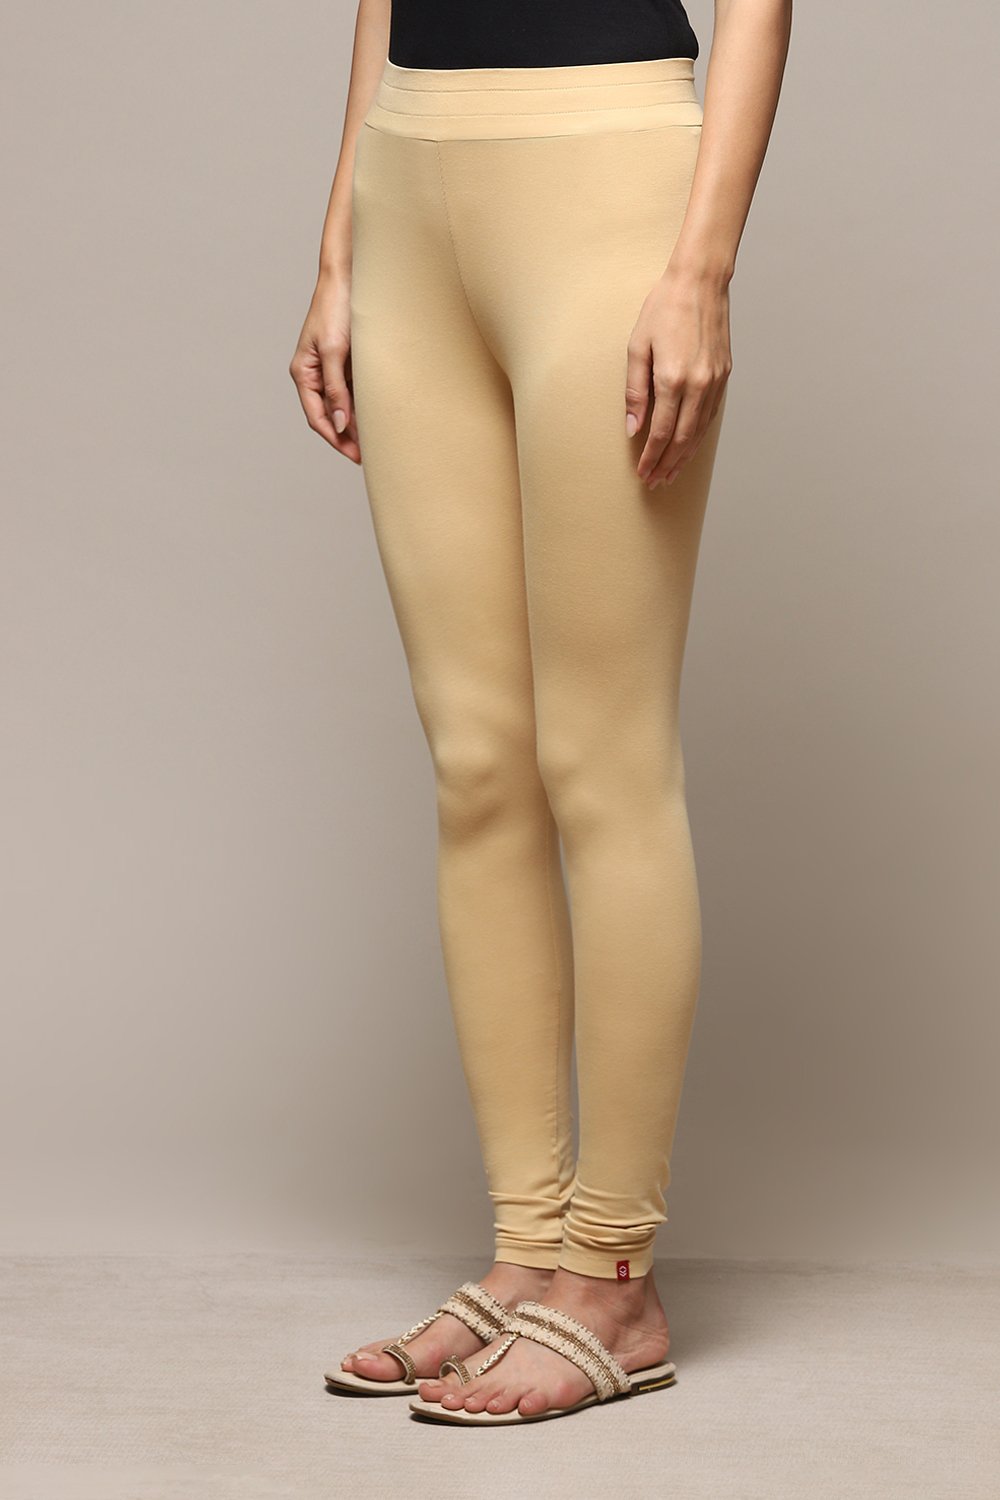 Royal Premium Quality Cotton Leggings for Women XL (Beige) at Rs 125, Cotton Leggings in Dadhel